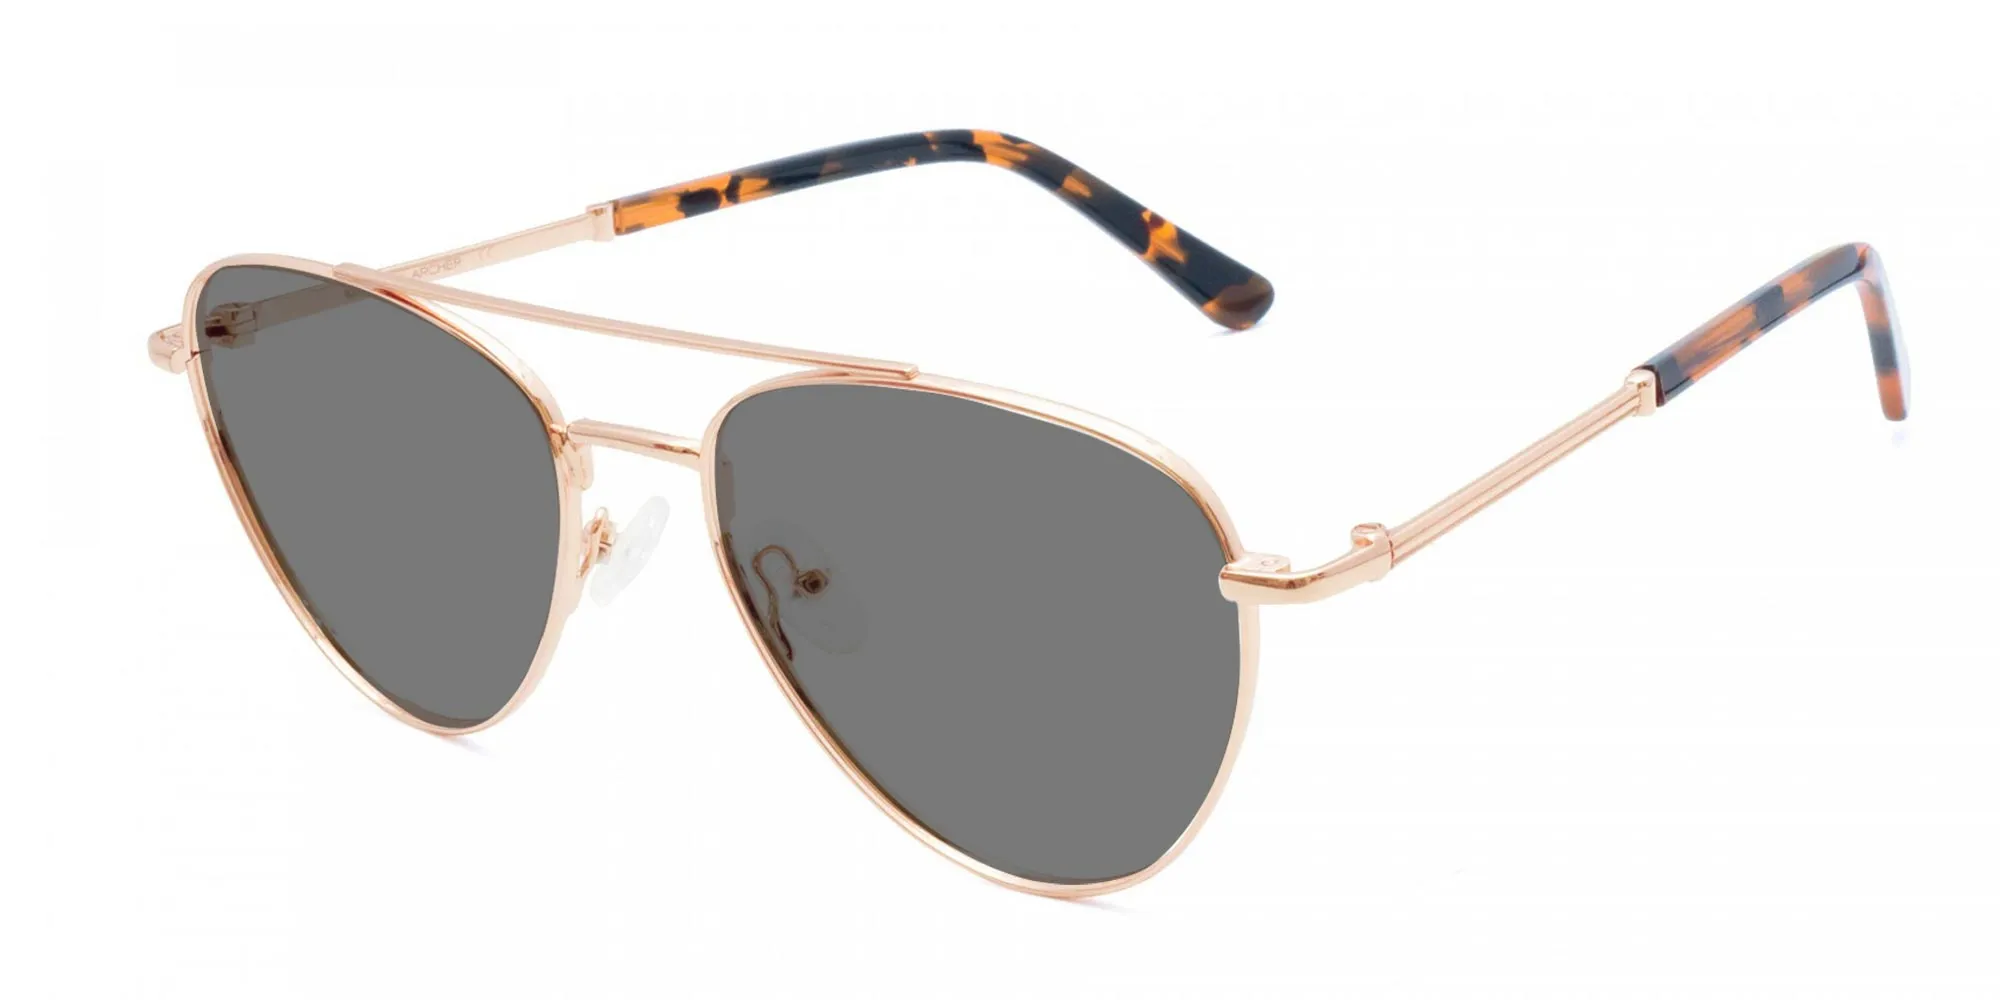 New 2023 Model Celebrity Sunglasses Women Luxury Brand Square Oversized  Shades | eBay